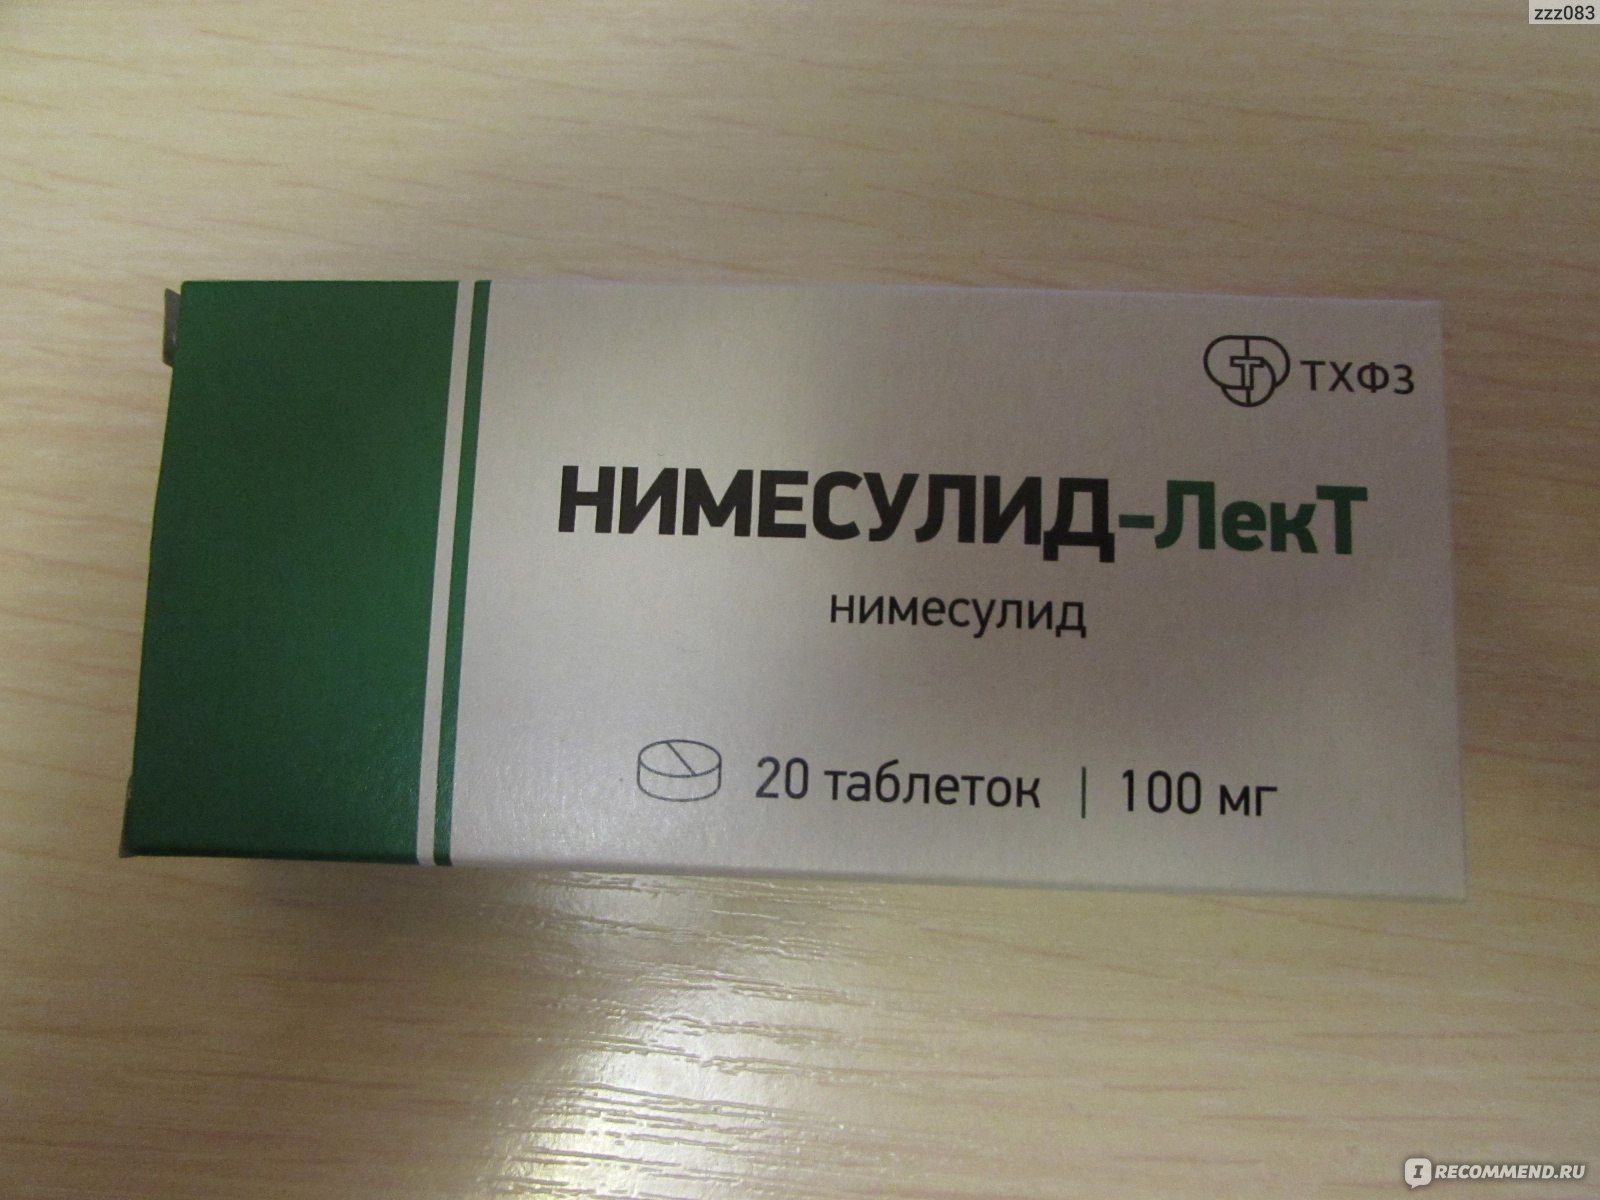 Нимесулид лект 100 мг